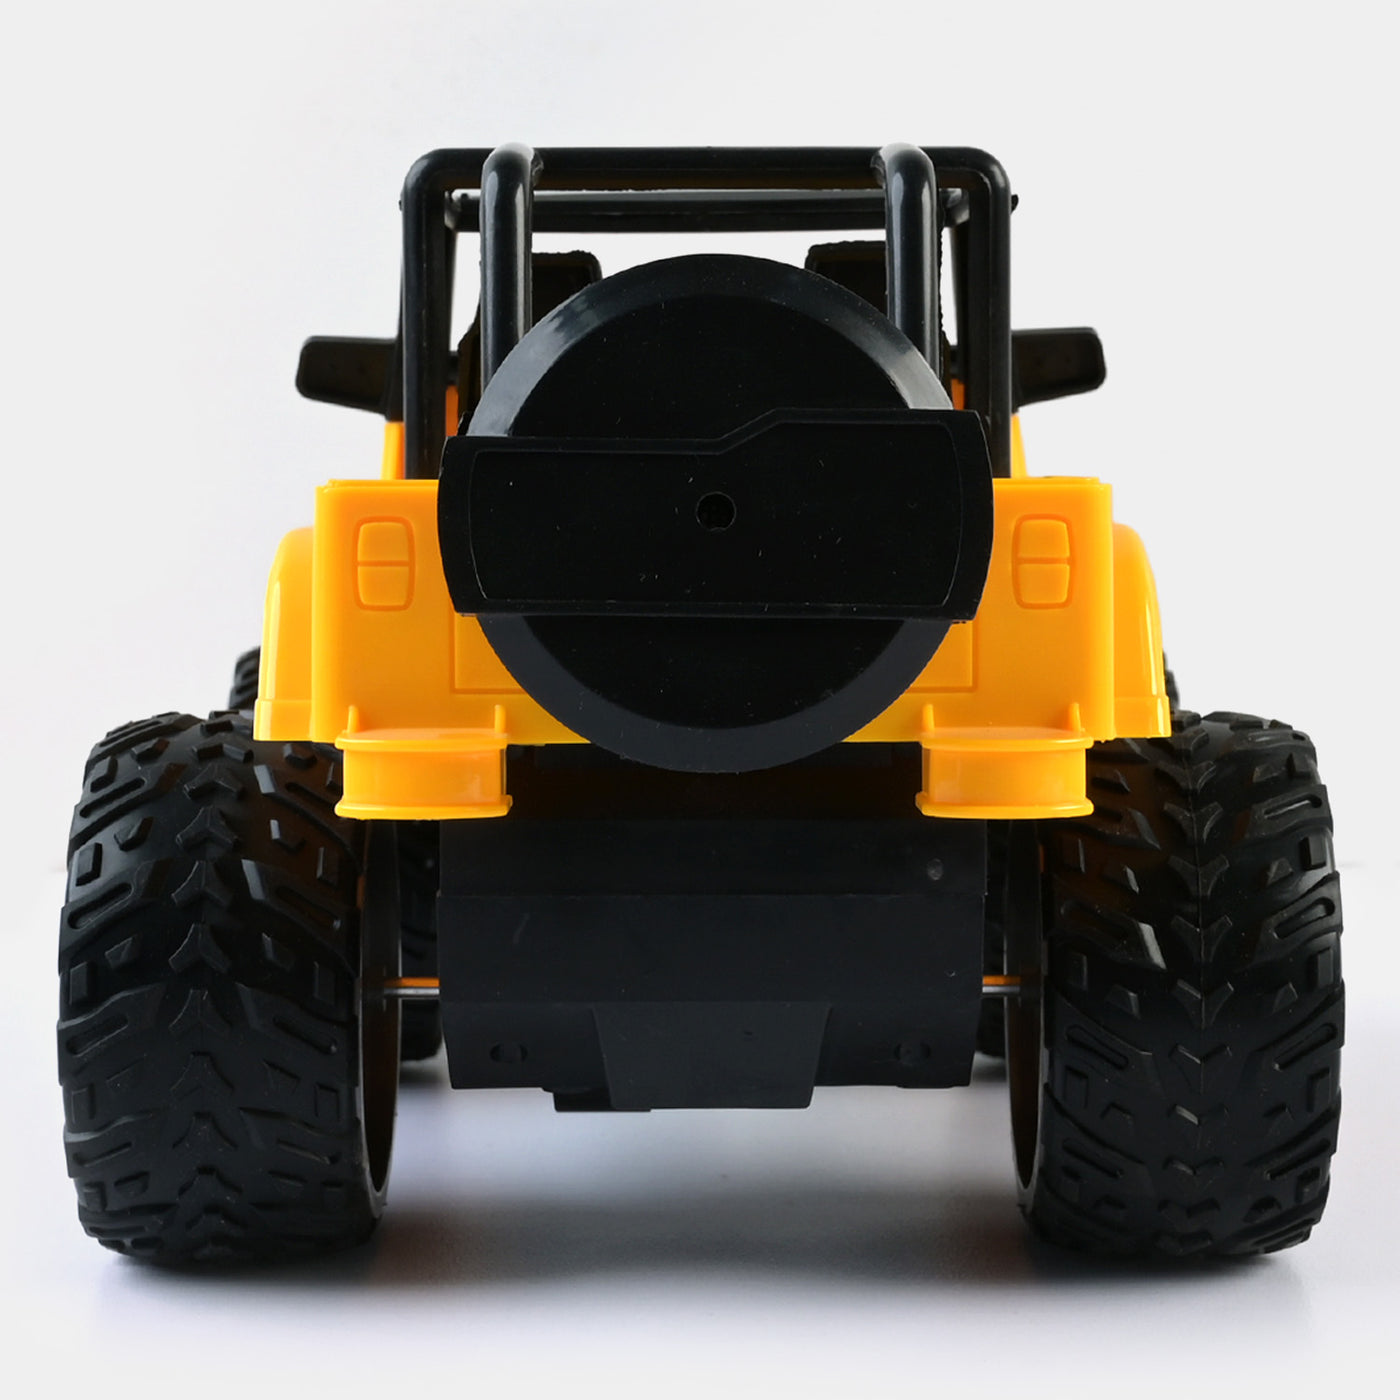 Remote Control Model Jeep For Kids